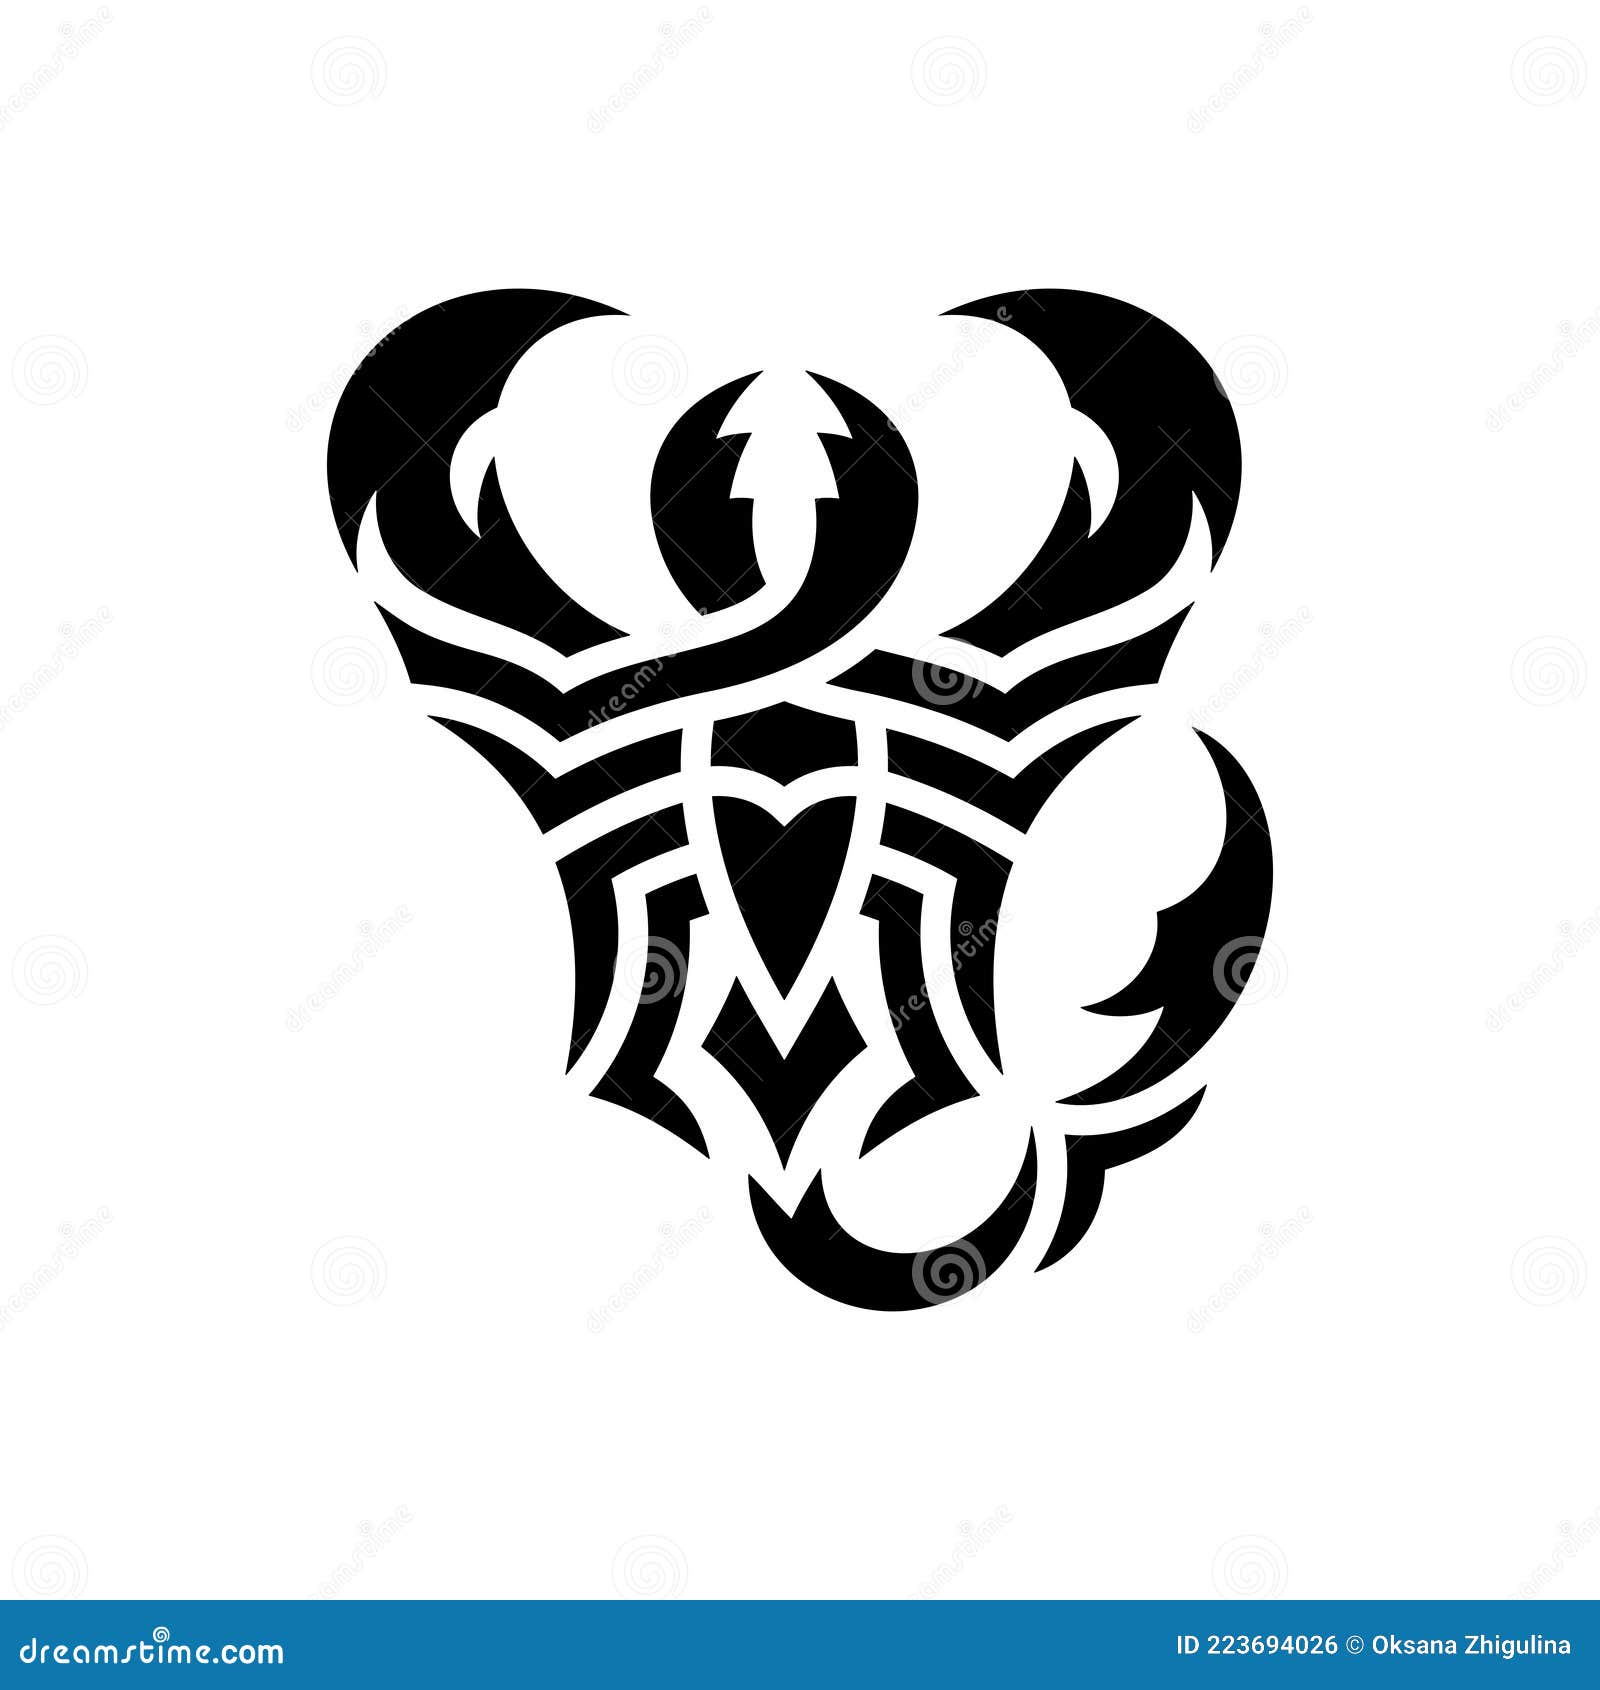 How to Draw a Tribal Scorpion Tattoo Design - Scorpion SVG #JSHcreates -  YouTube